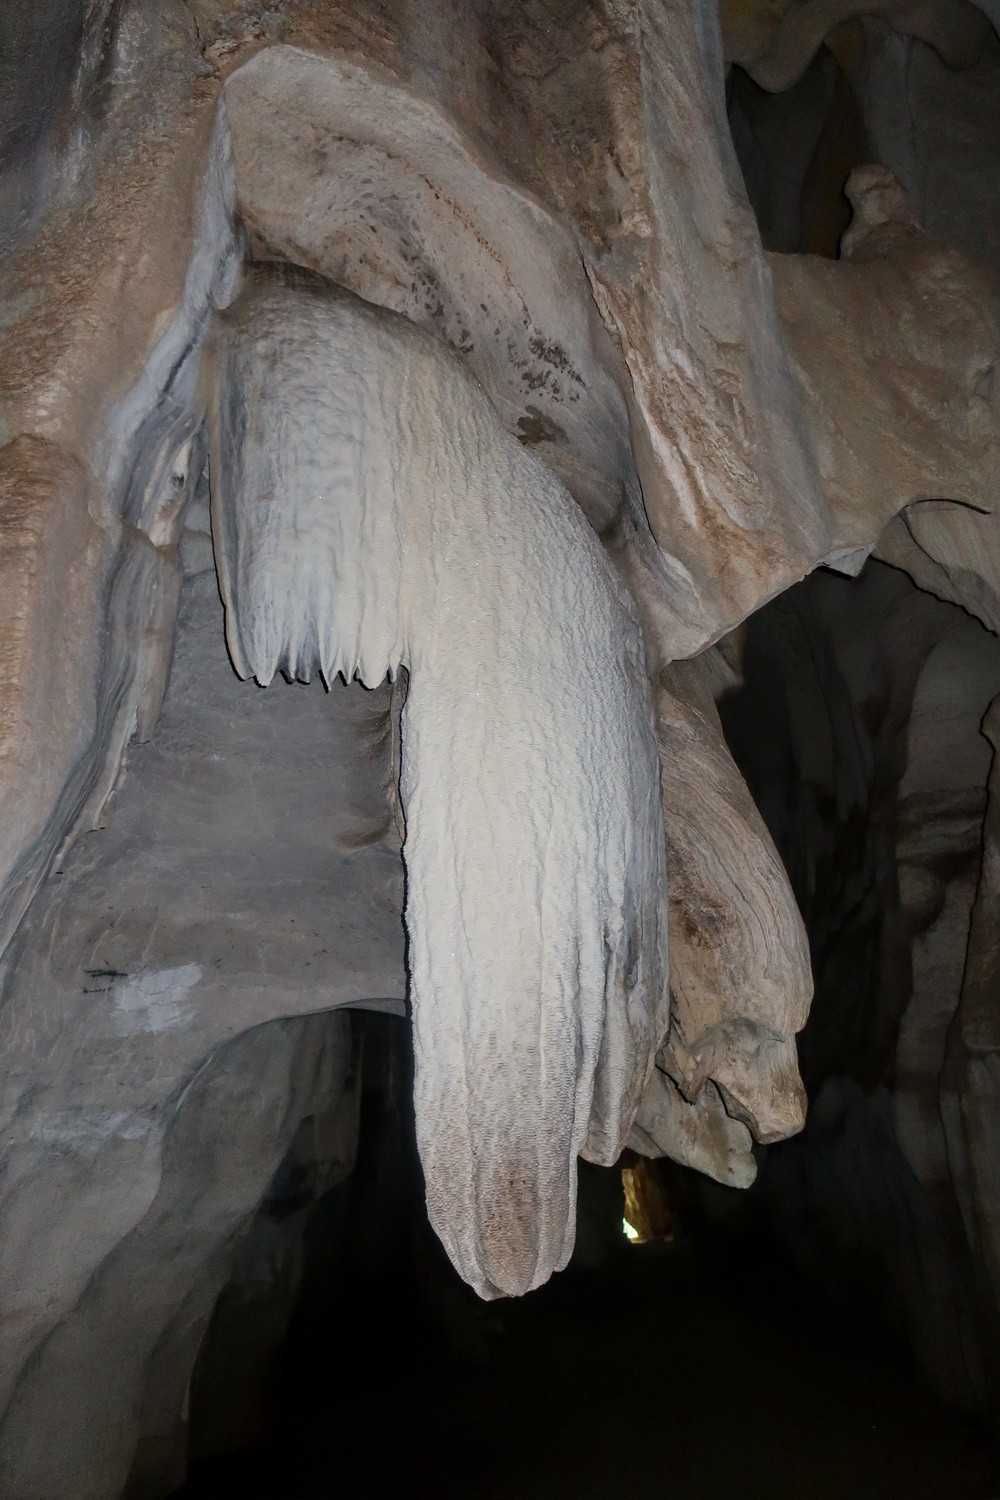 Huge stalactite